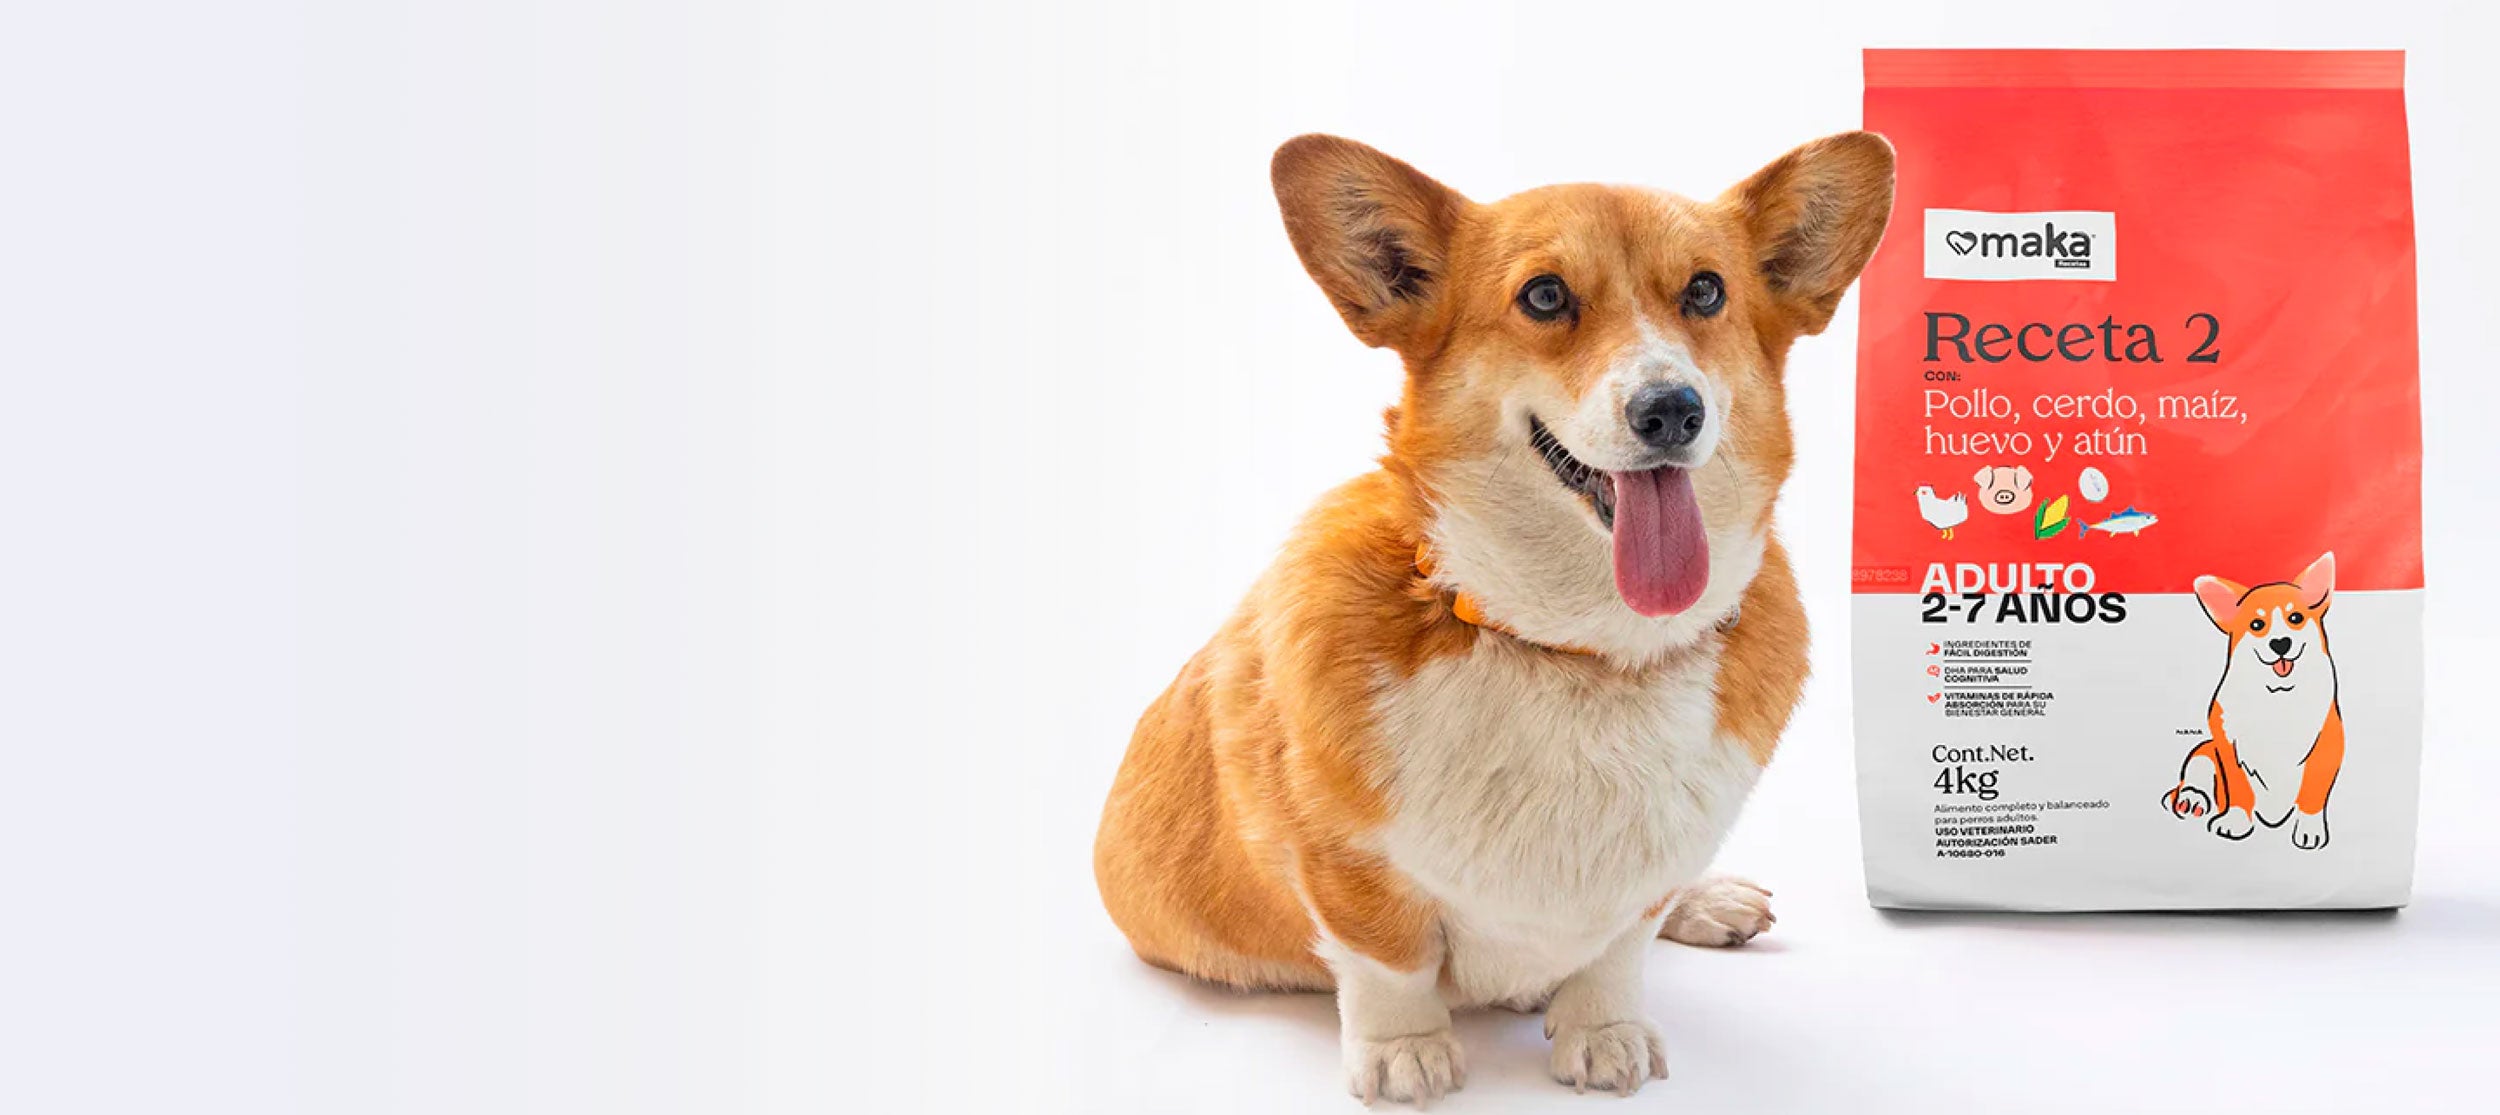 A dog alongside a 4kg bag of dog food from Maka brand